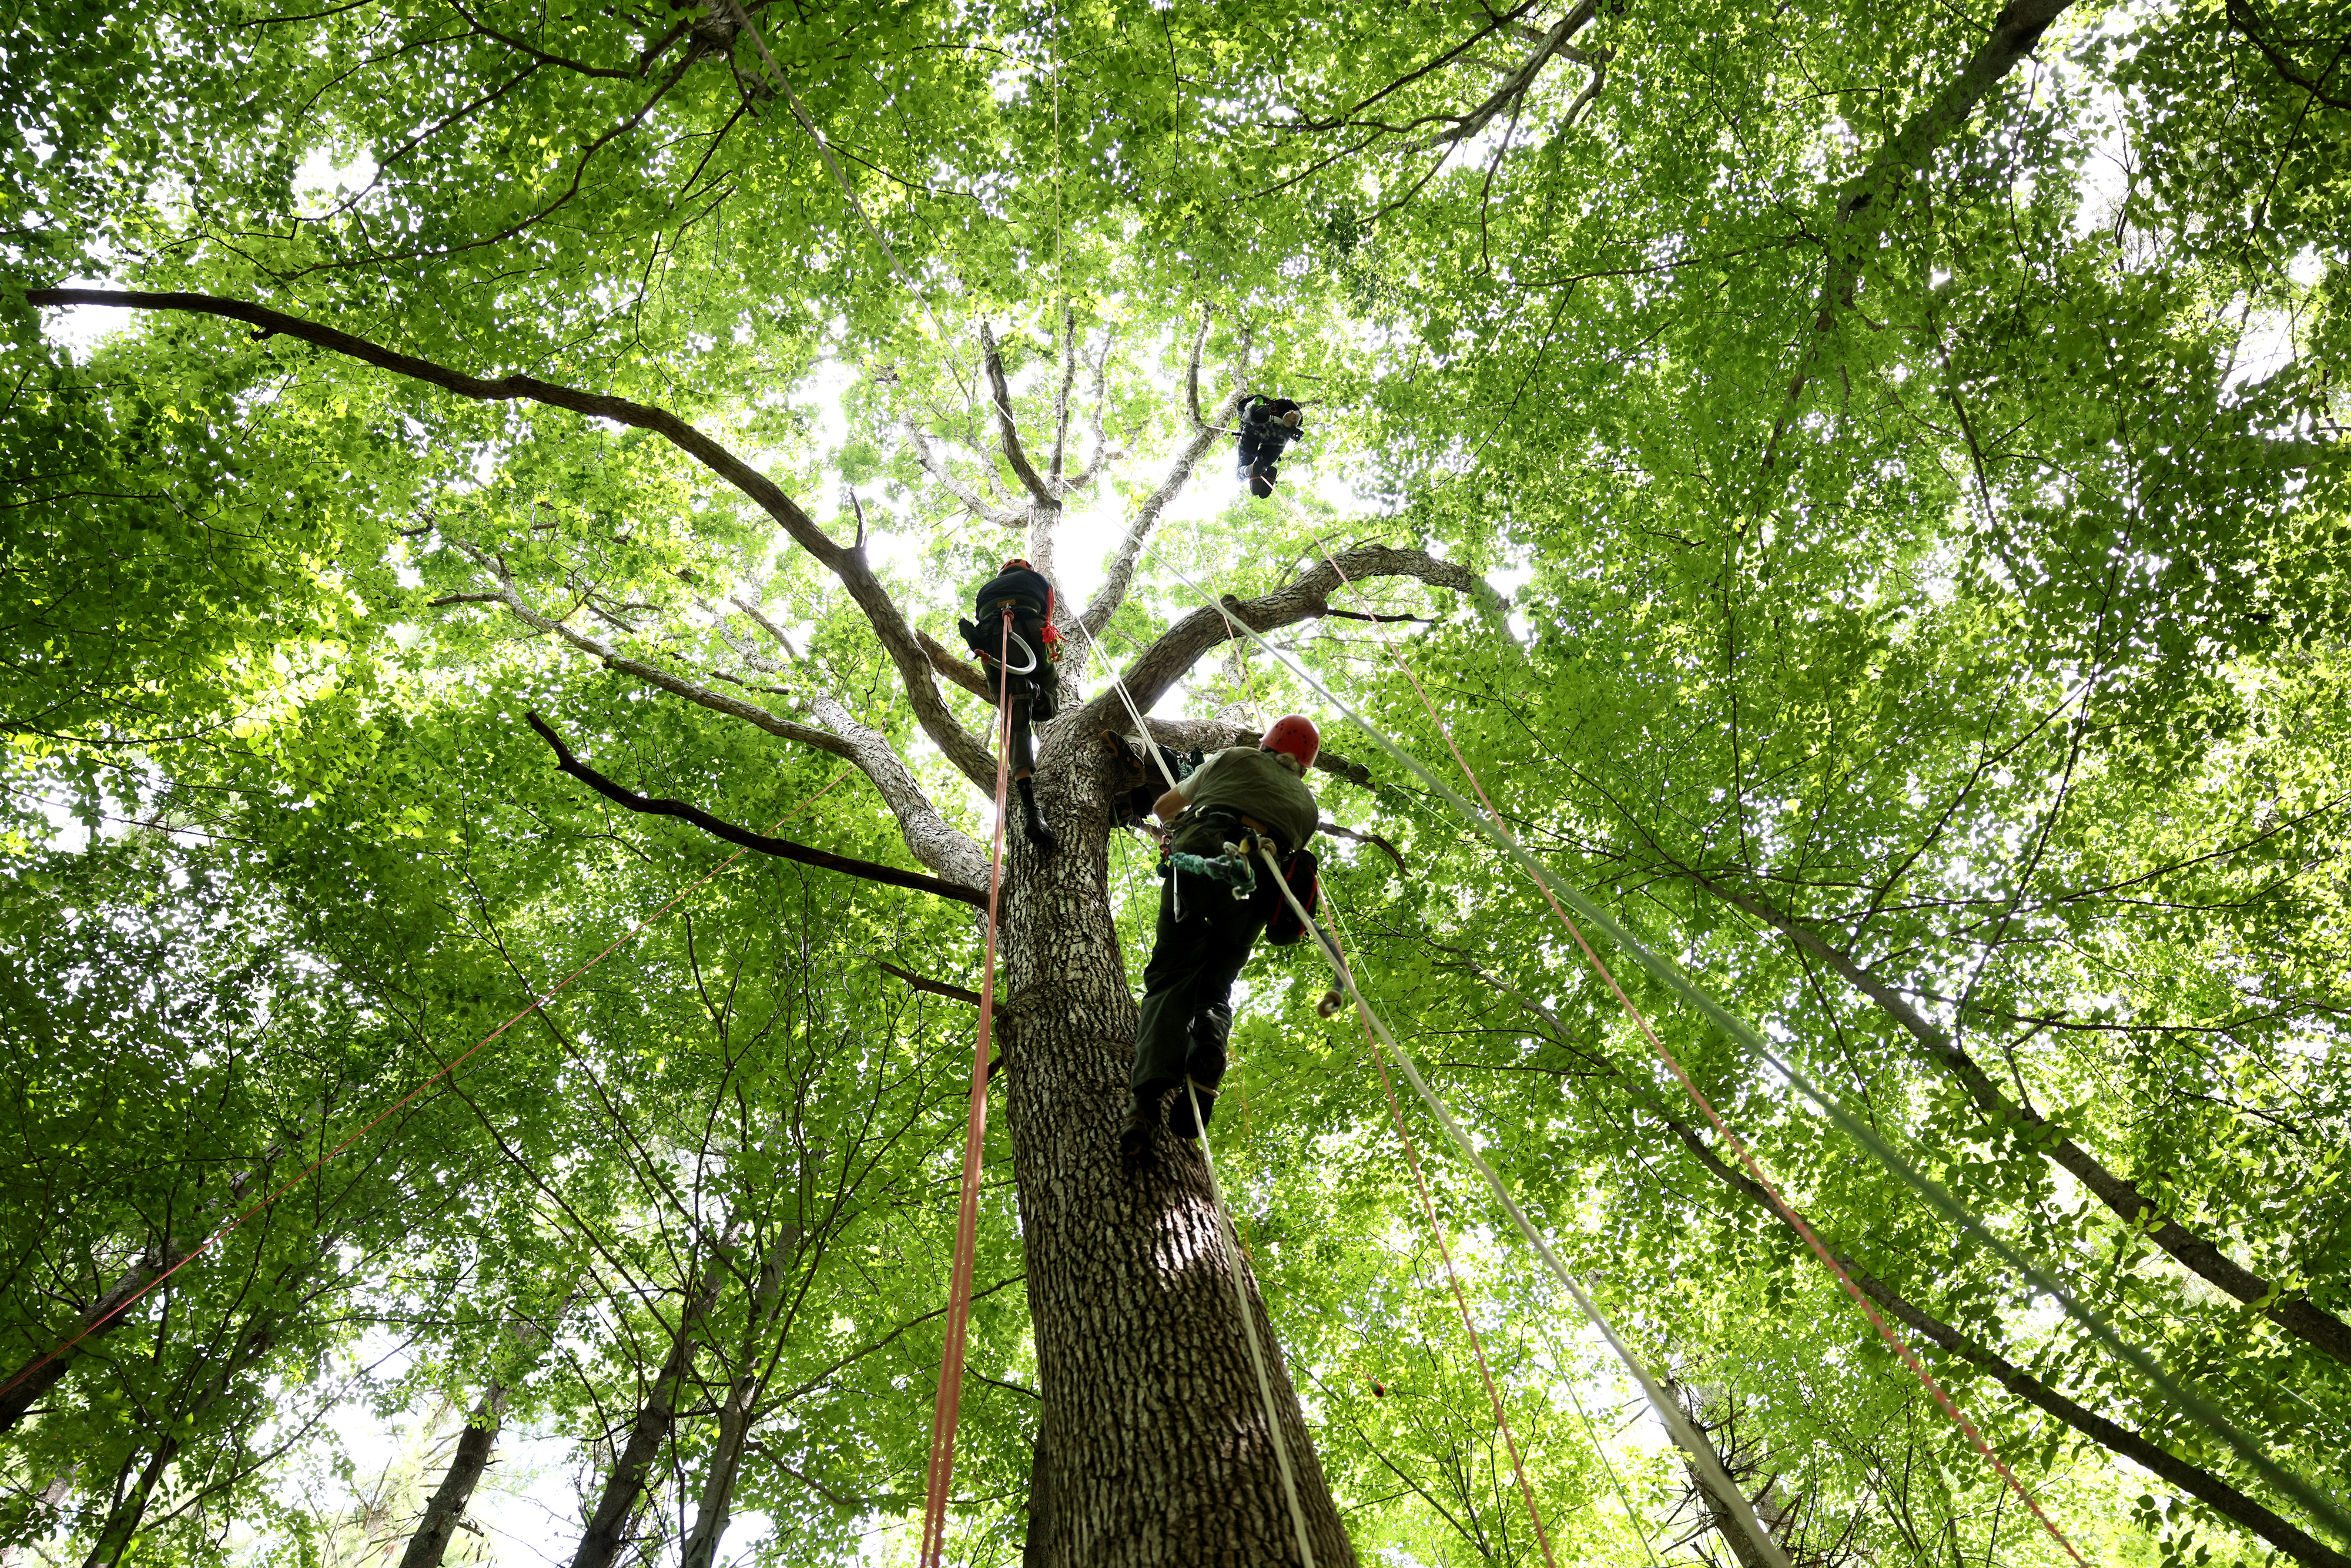 Climb a tree. Face death. Find yourself? - The Boston Globe